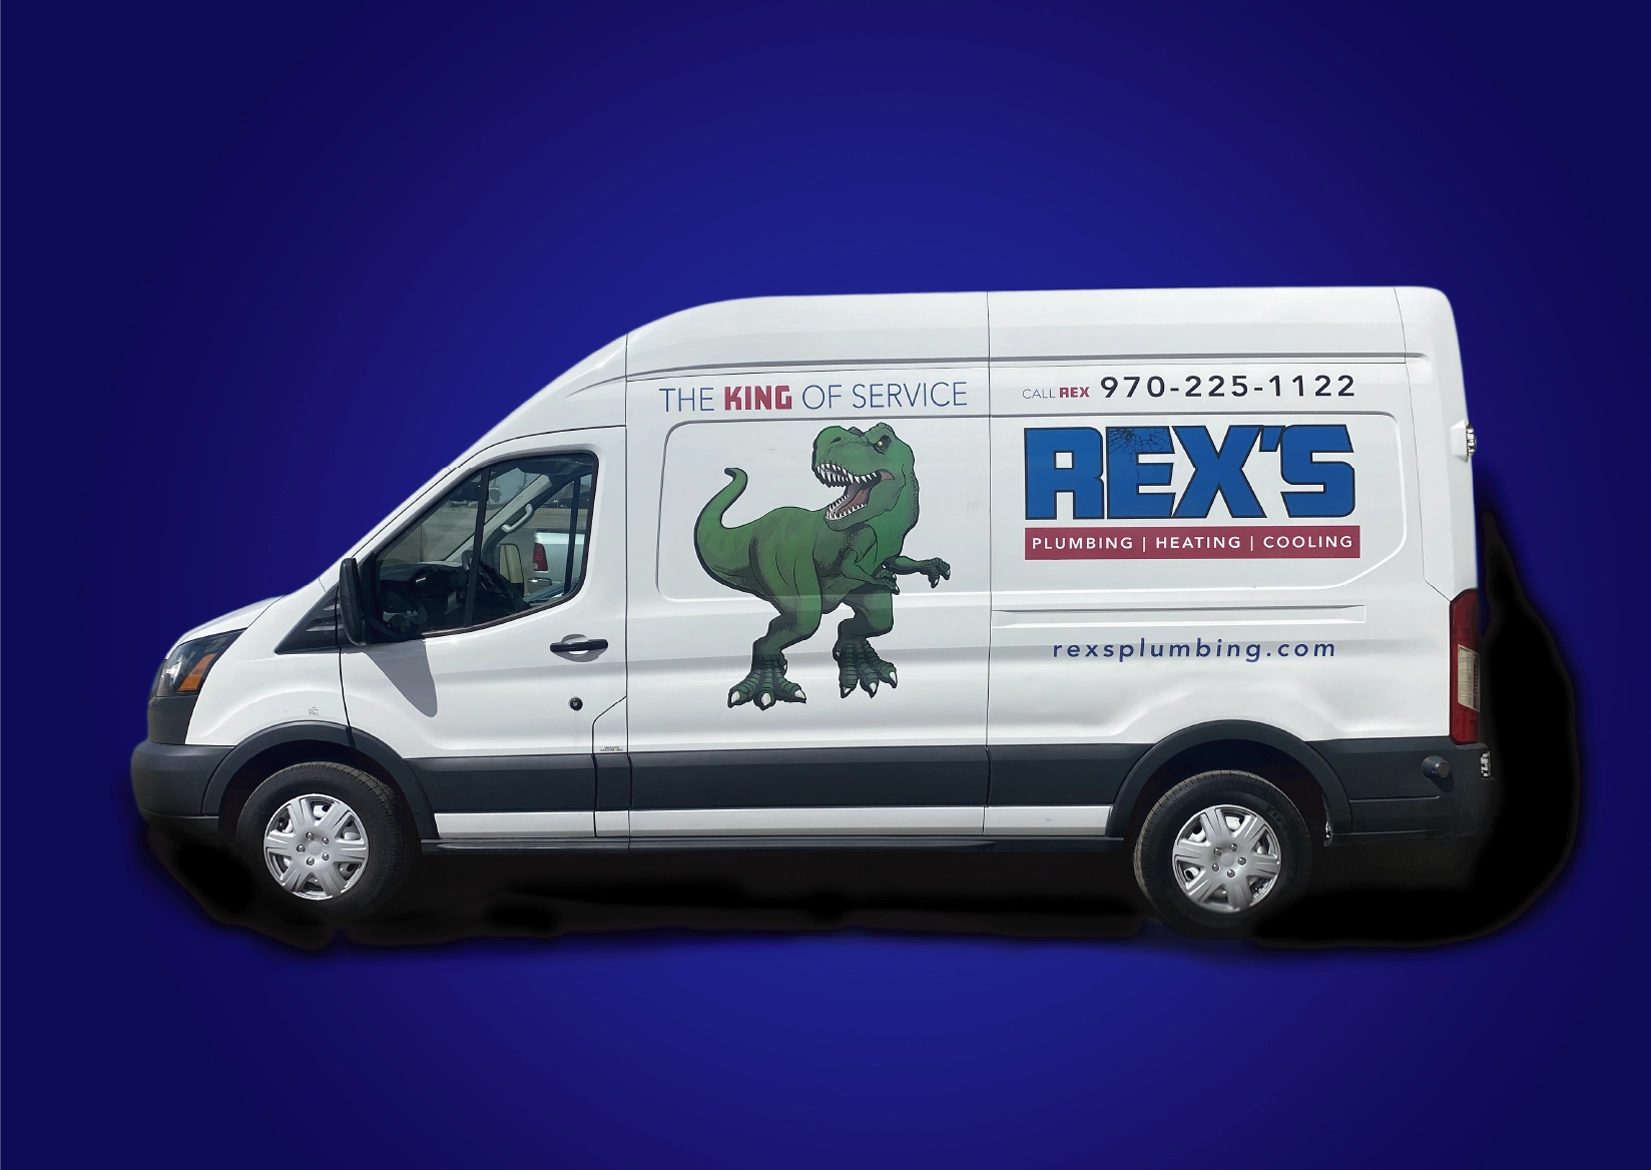 Rexs Plumbing and Heating Vehicle Wrap Design